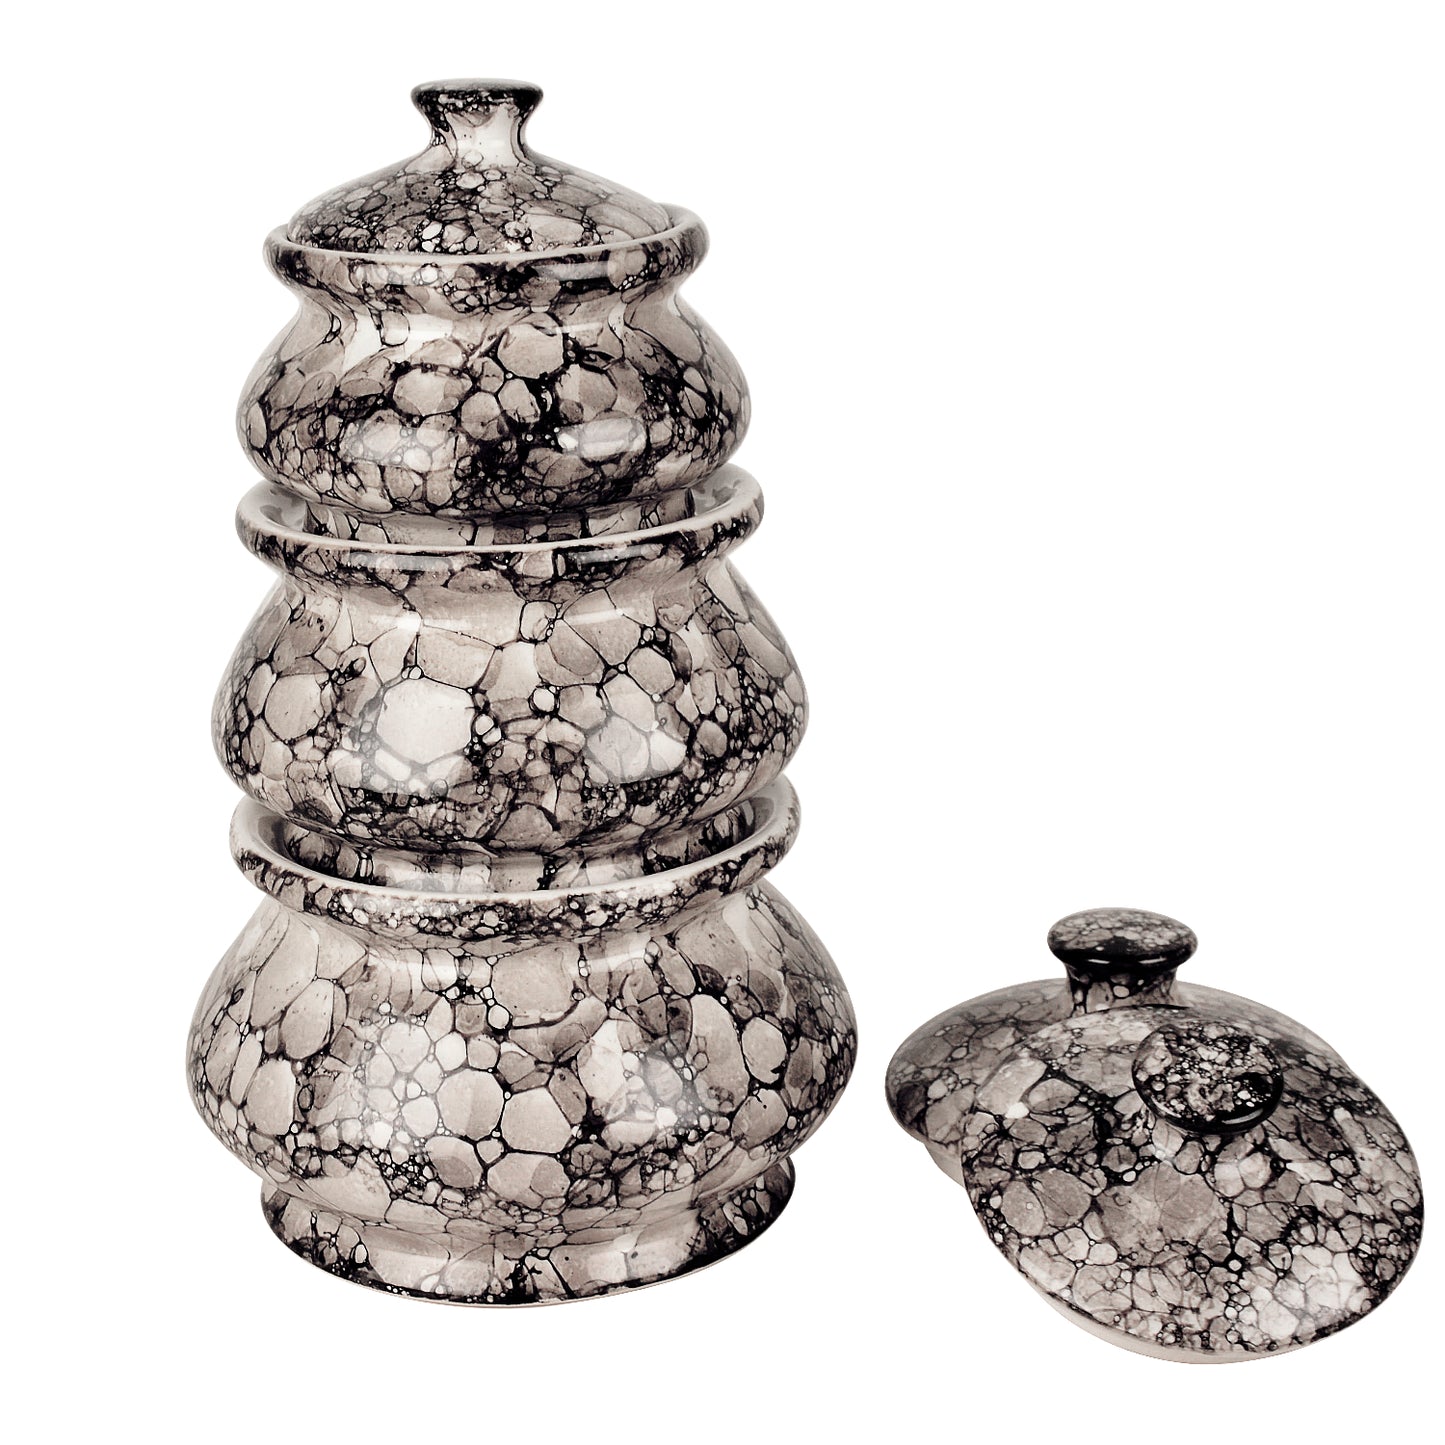 Handpainted Ceramic Handi Set with Lid (Set of 3, Grey Luster)